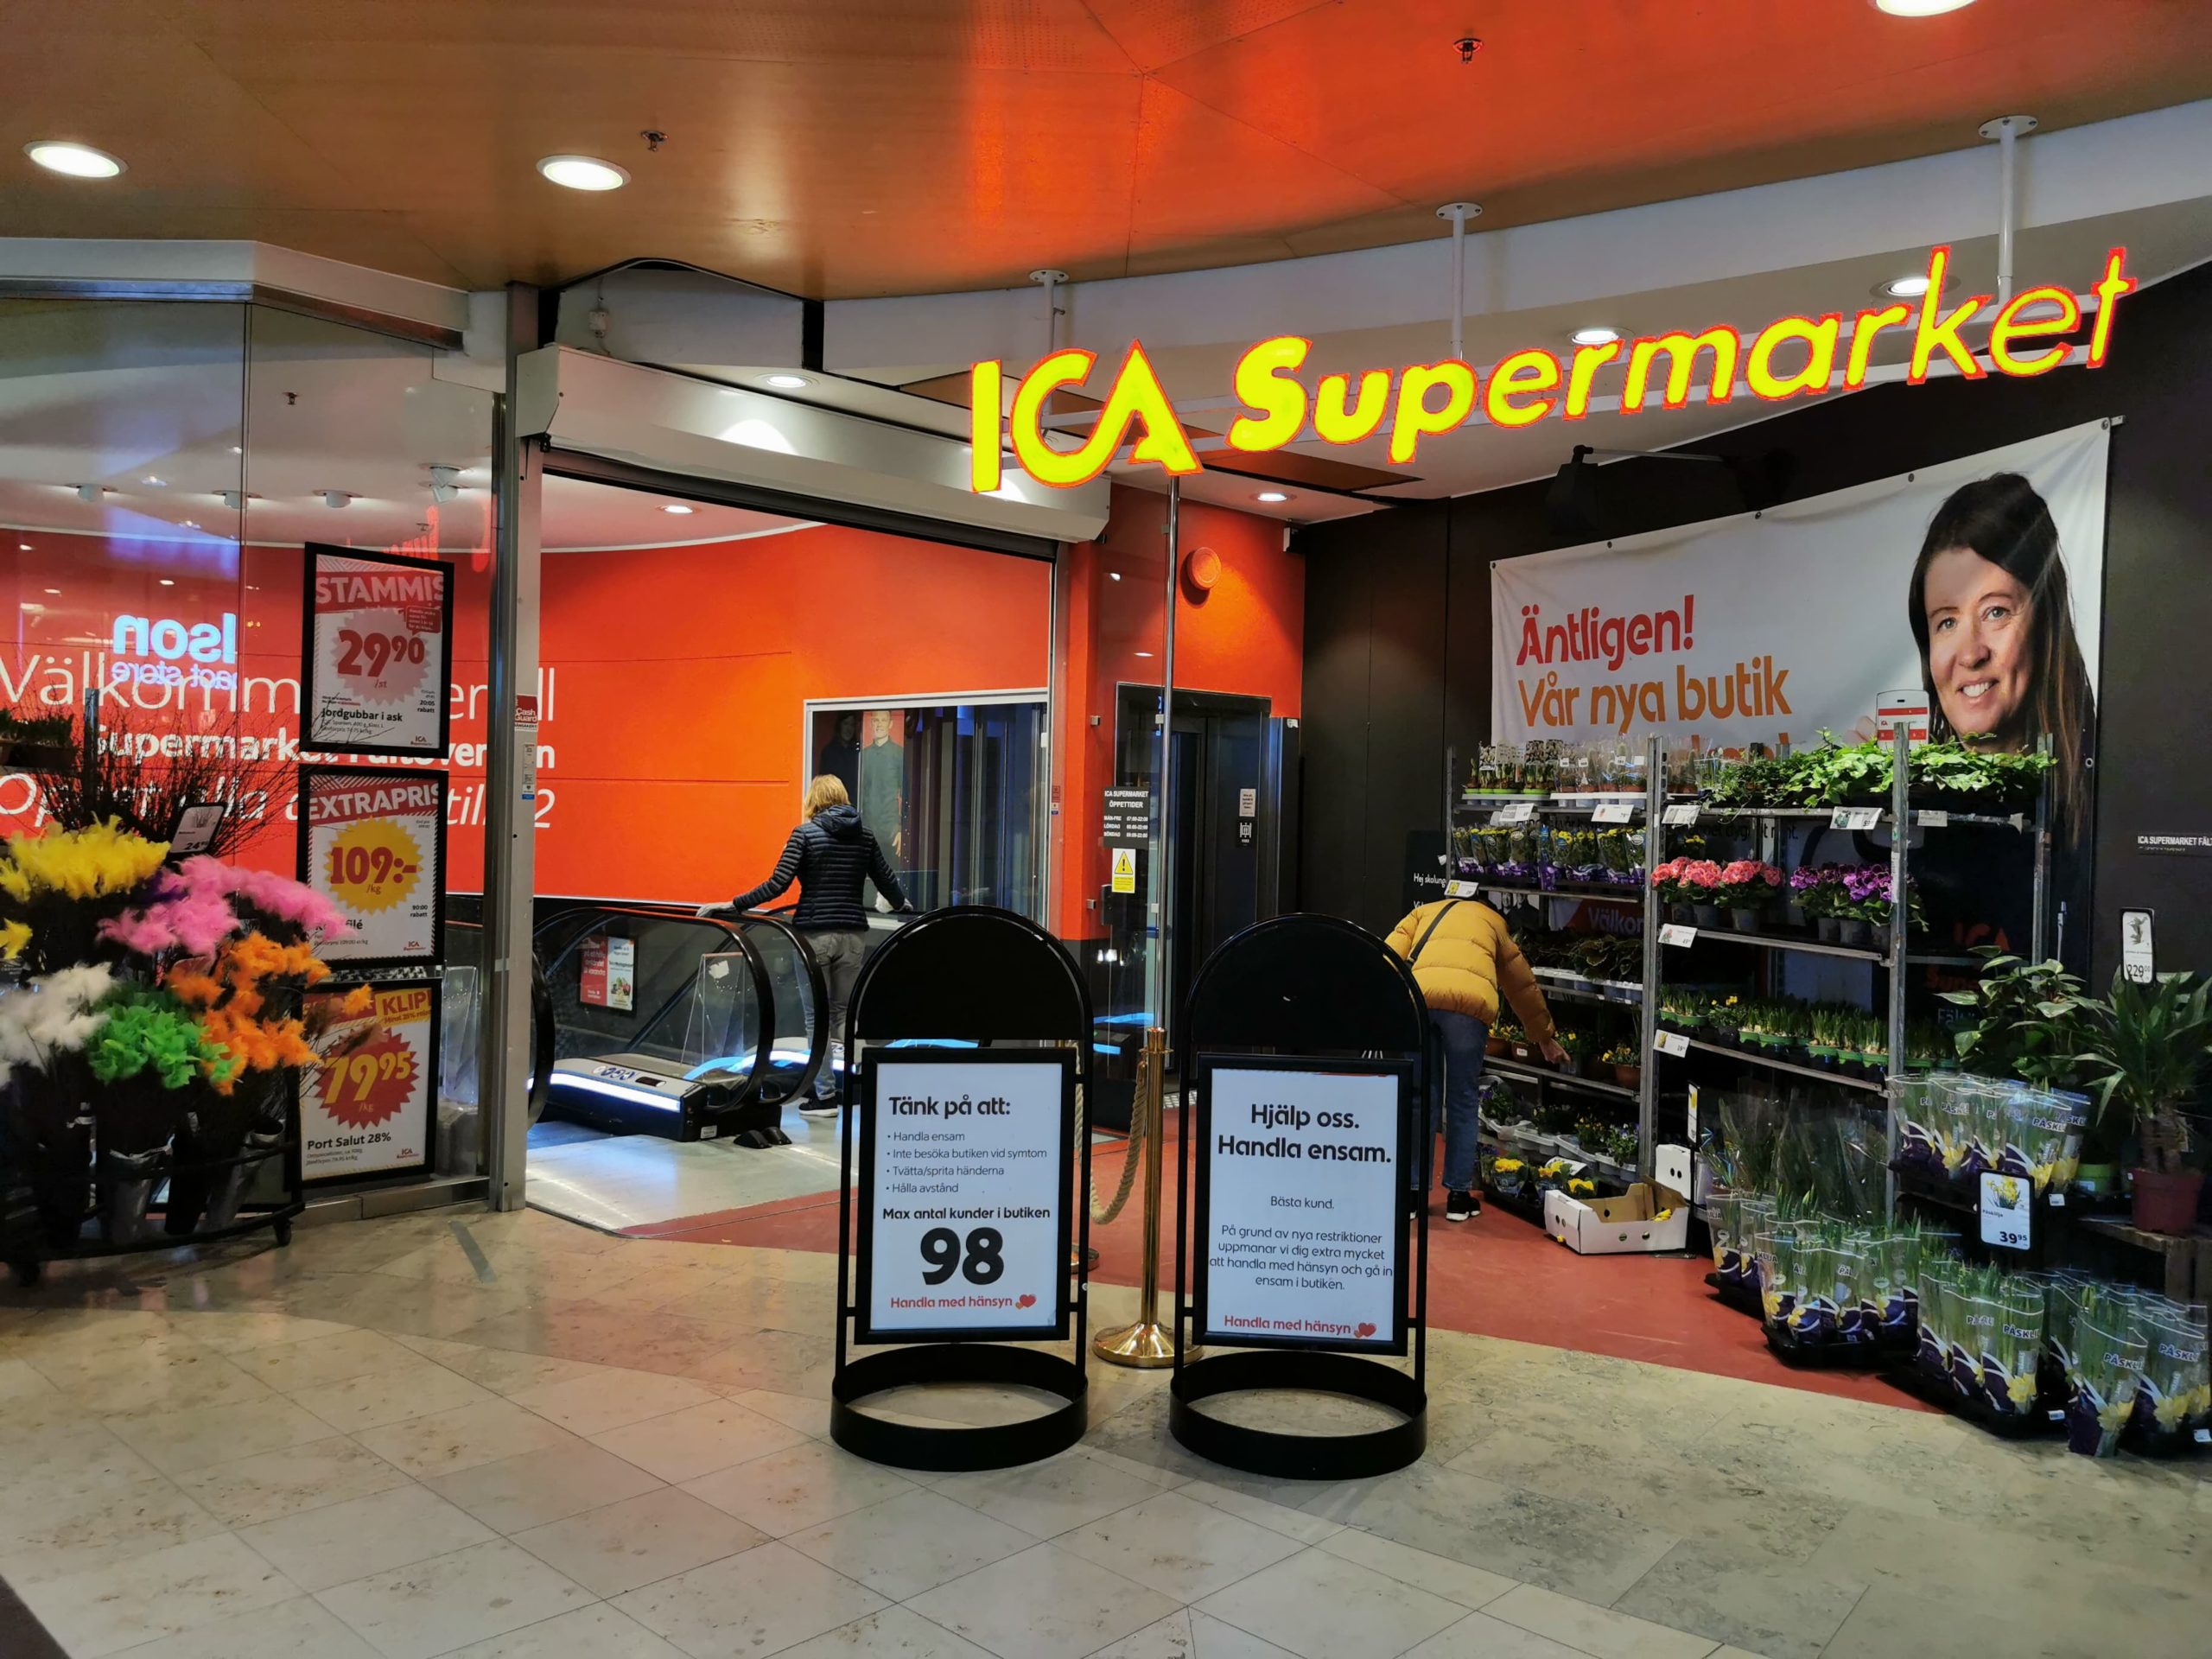 ICA Supermarket Fältöversten